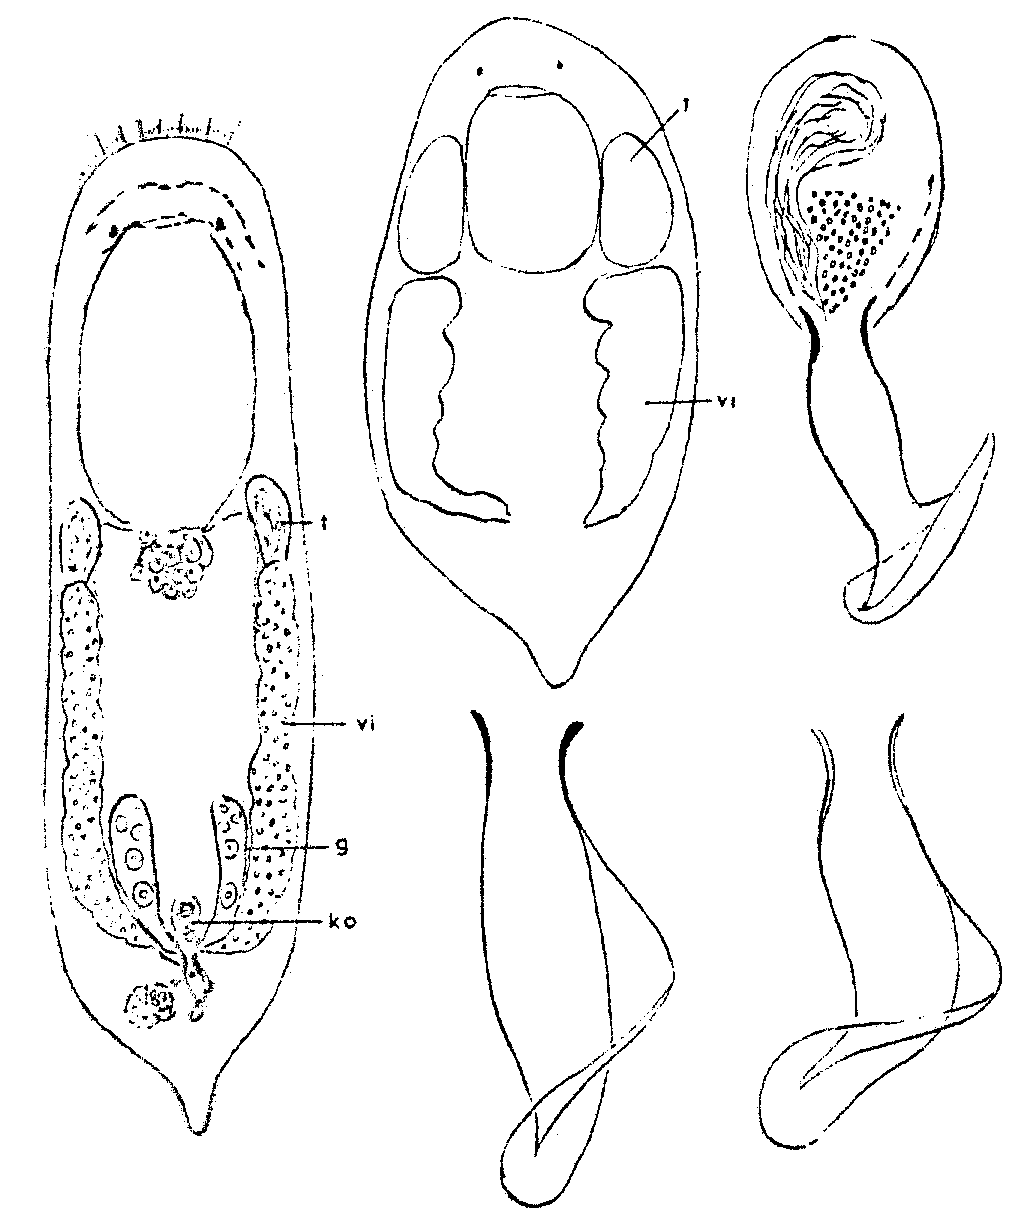 Fig Provortex pallidus